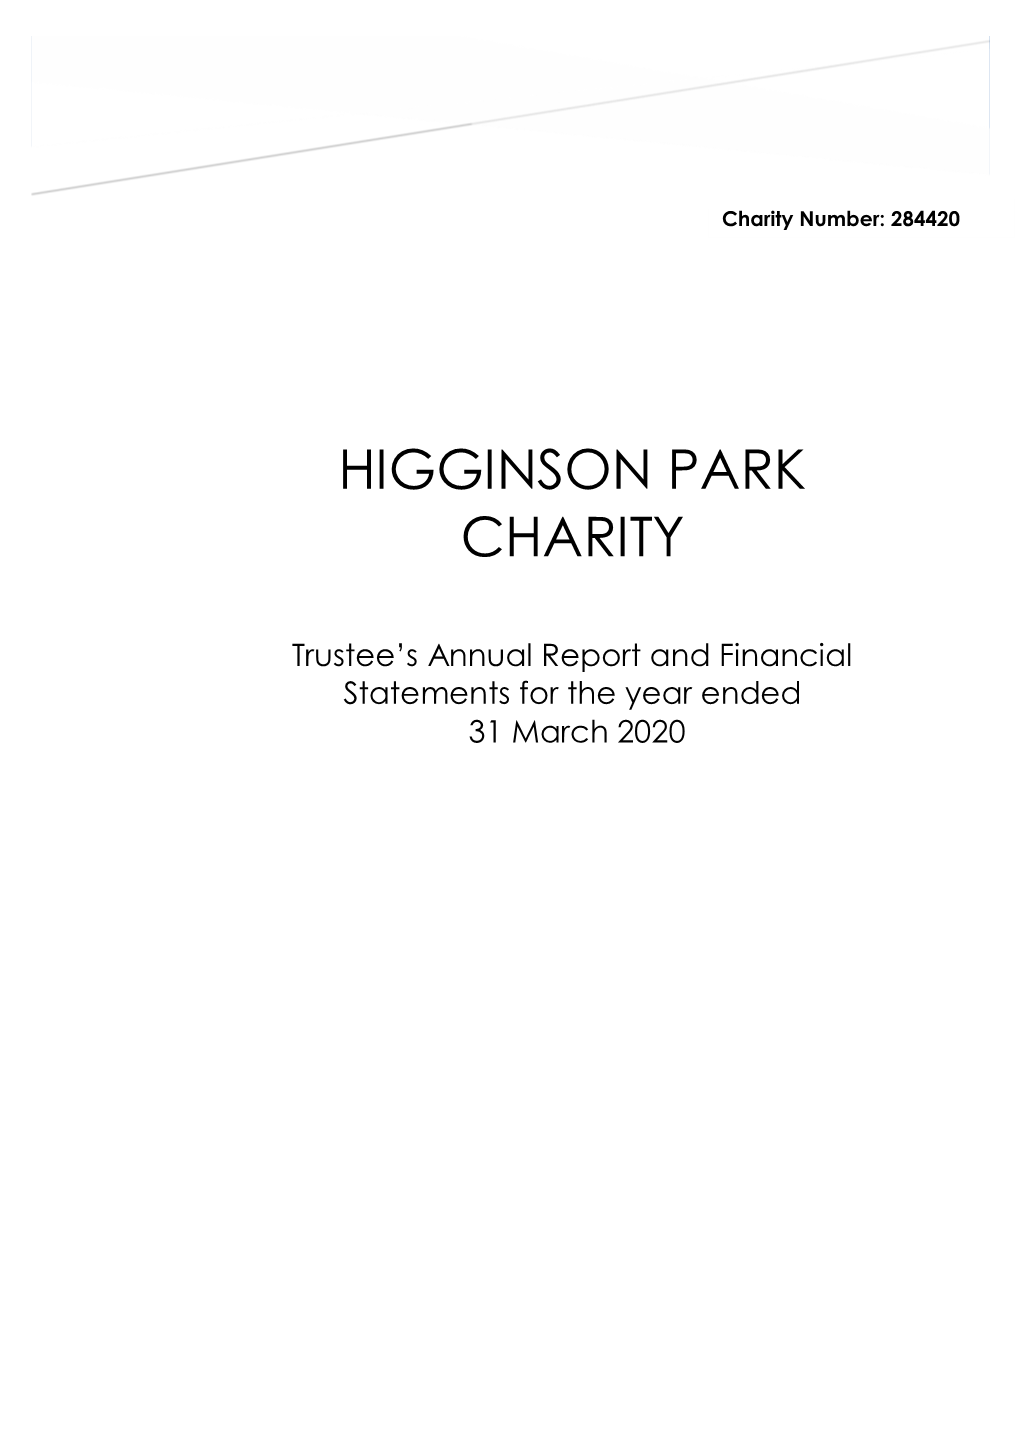 Higginson Park Charity Number: 284420